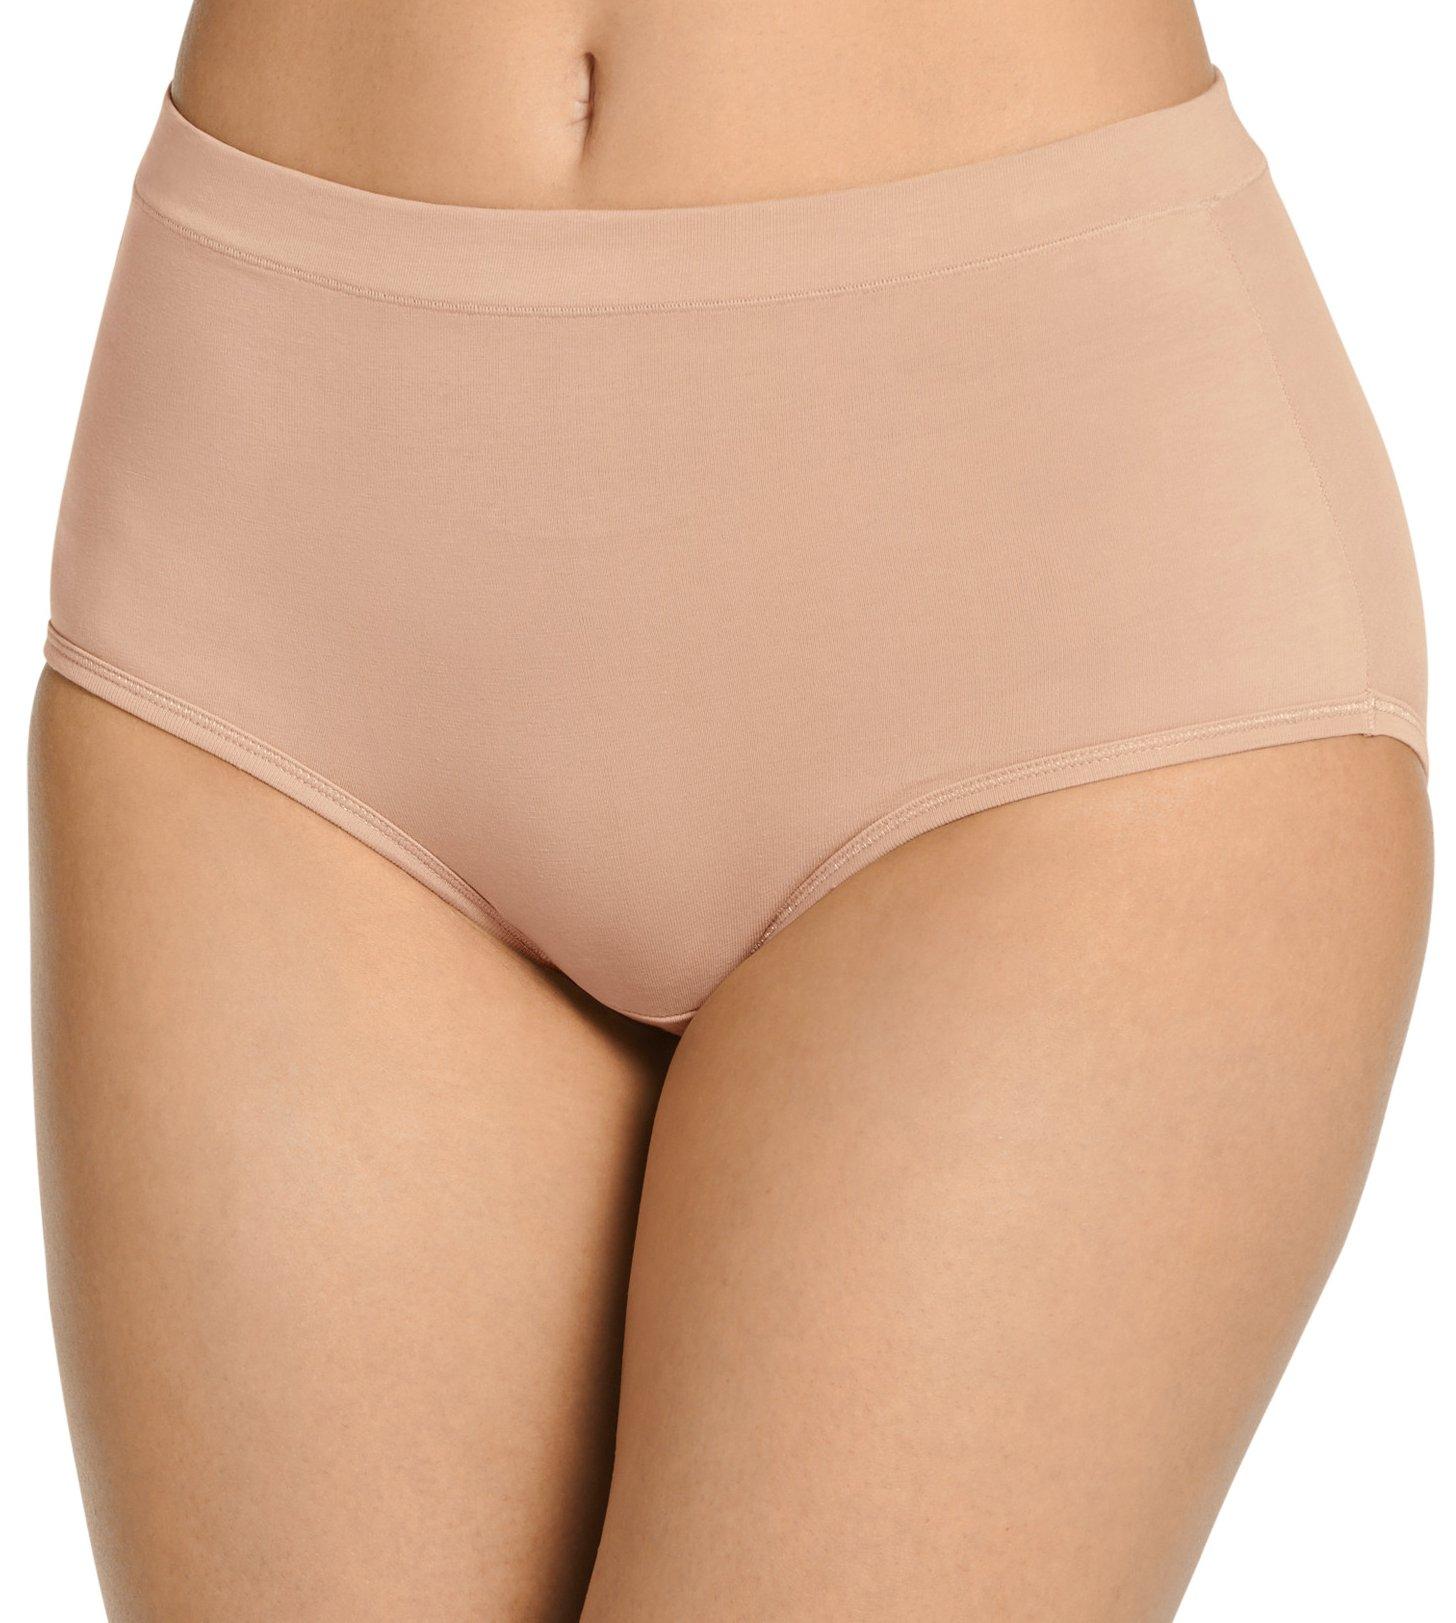 Bellefit Womens Cheeky Cotton Underwear Panties for Women